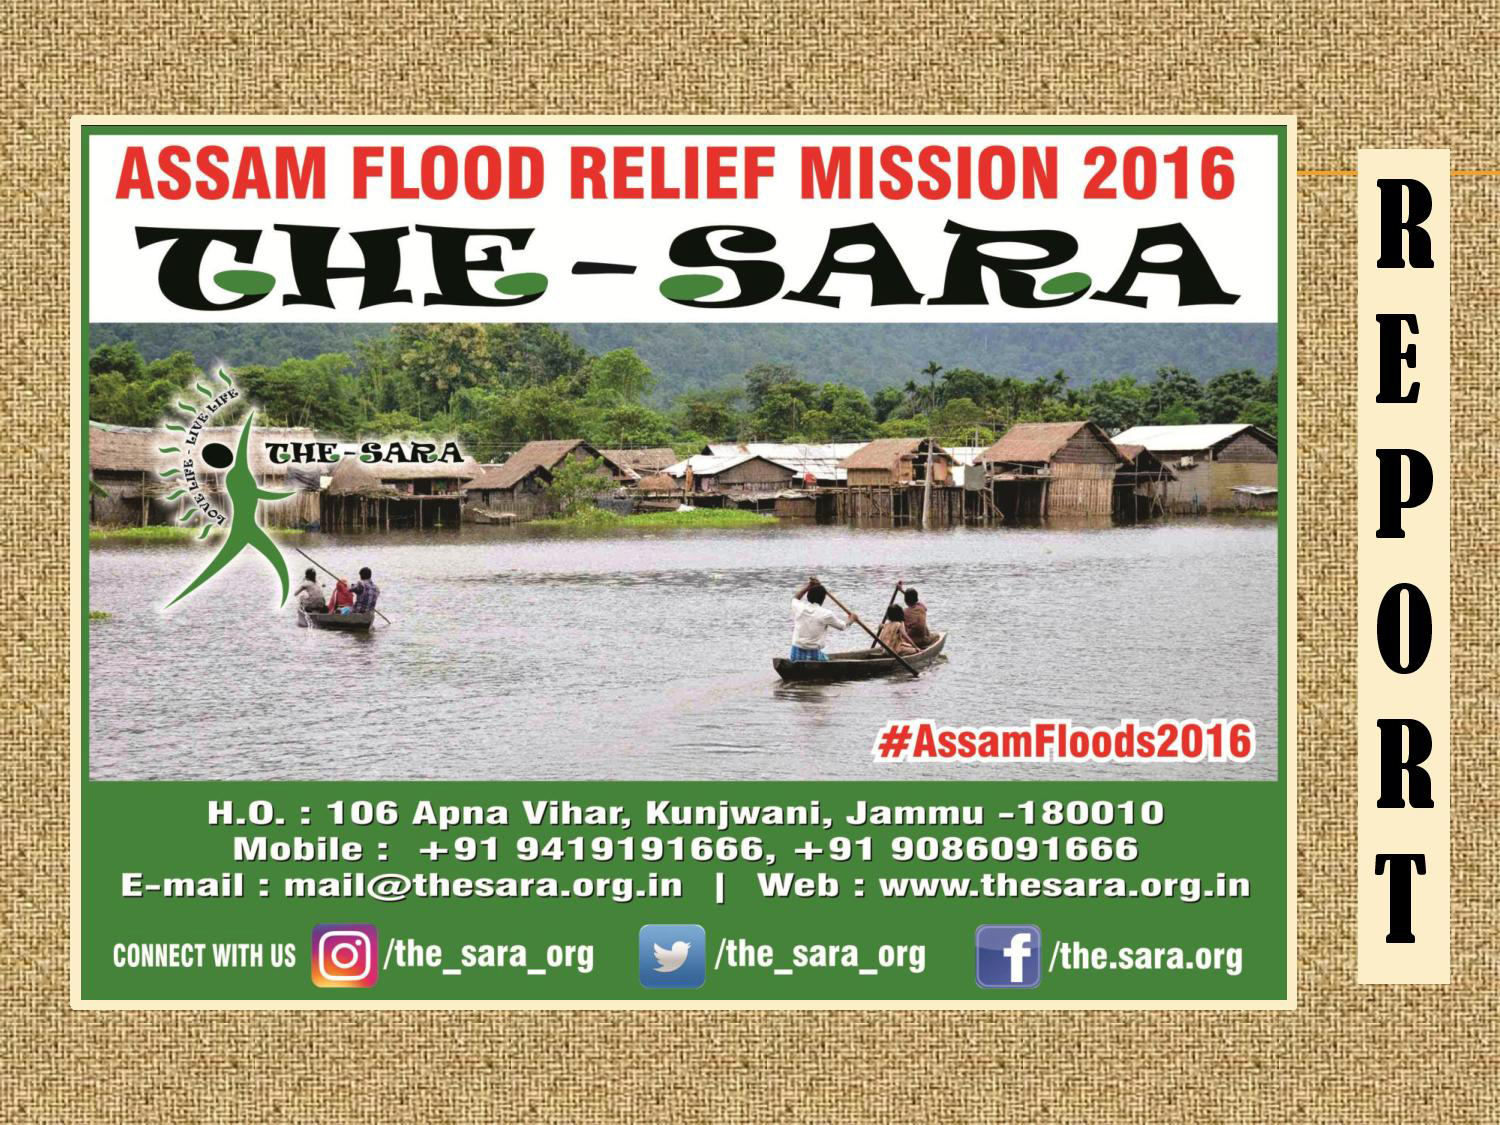 Assam Flood Relief Mission Image.